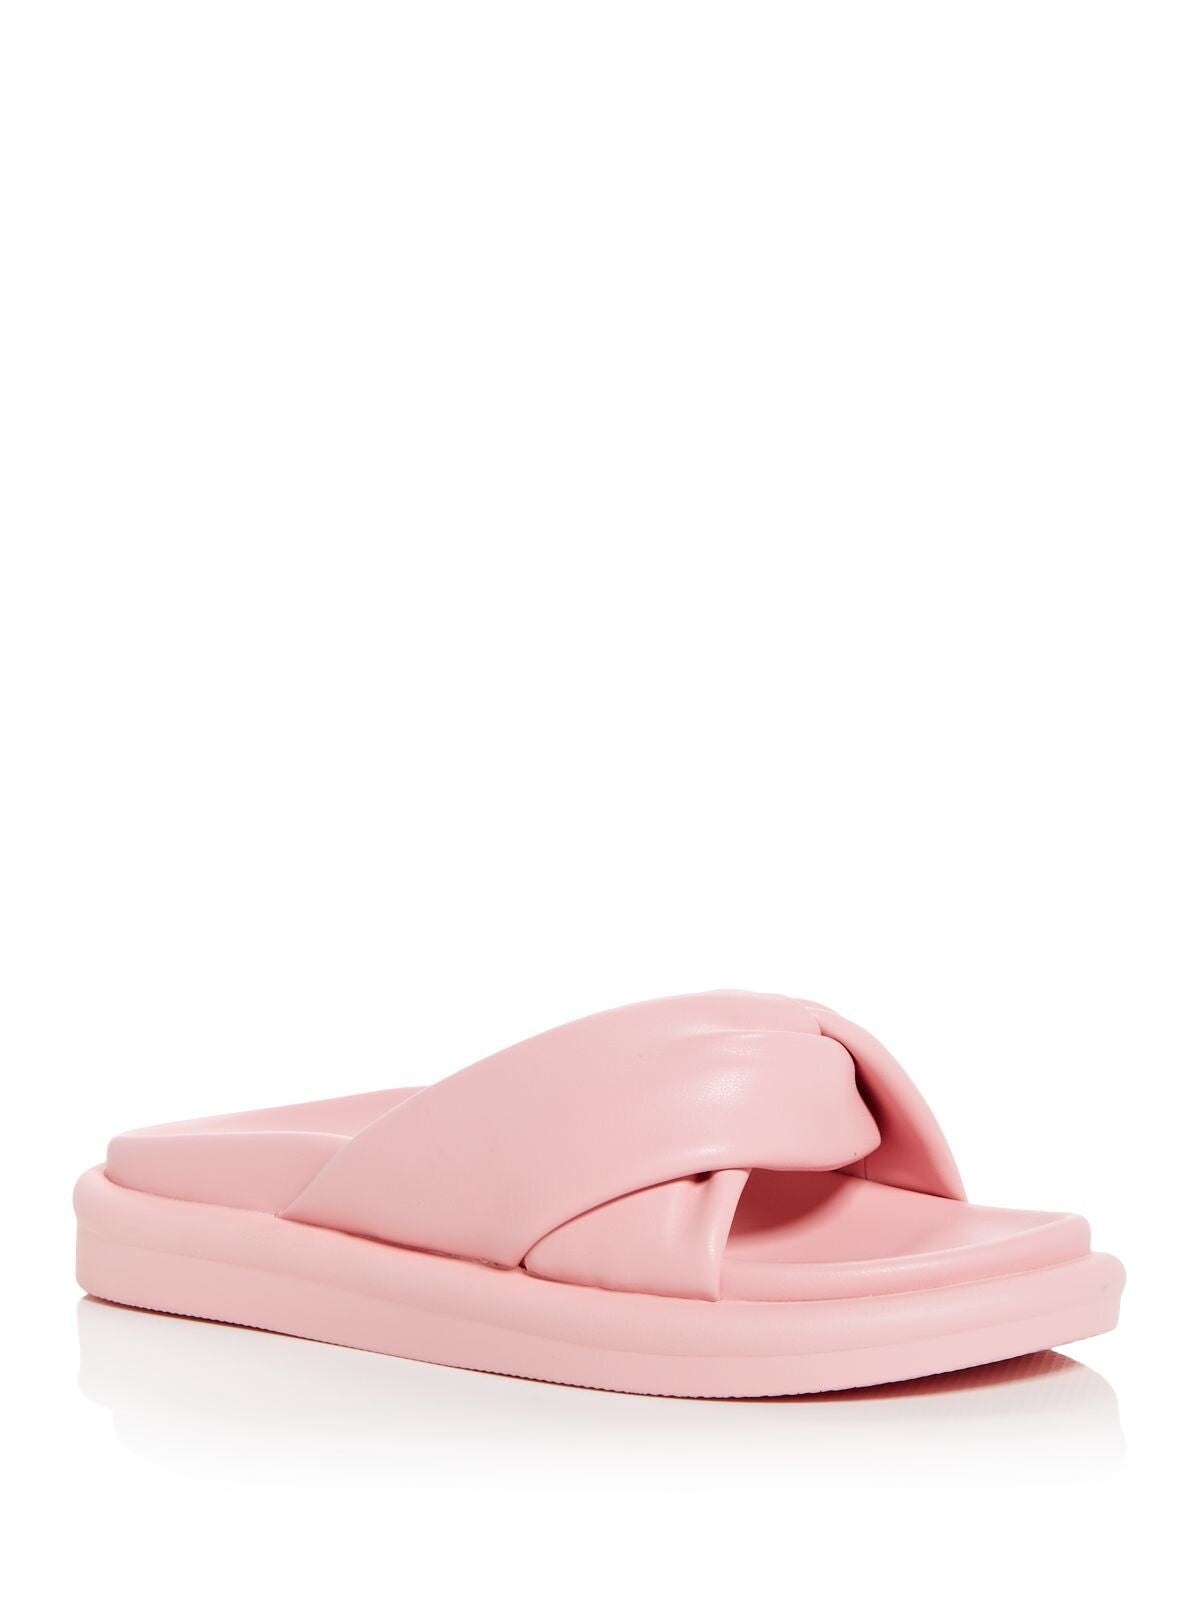 AQUA Womens Pink Knotted Comfort Ryle Round Toe Platform Slip On Slide Sandals Shoes 5.5 M